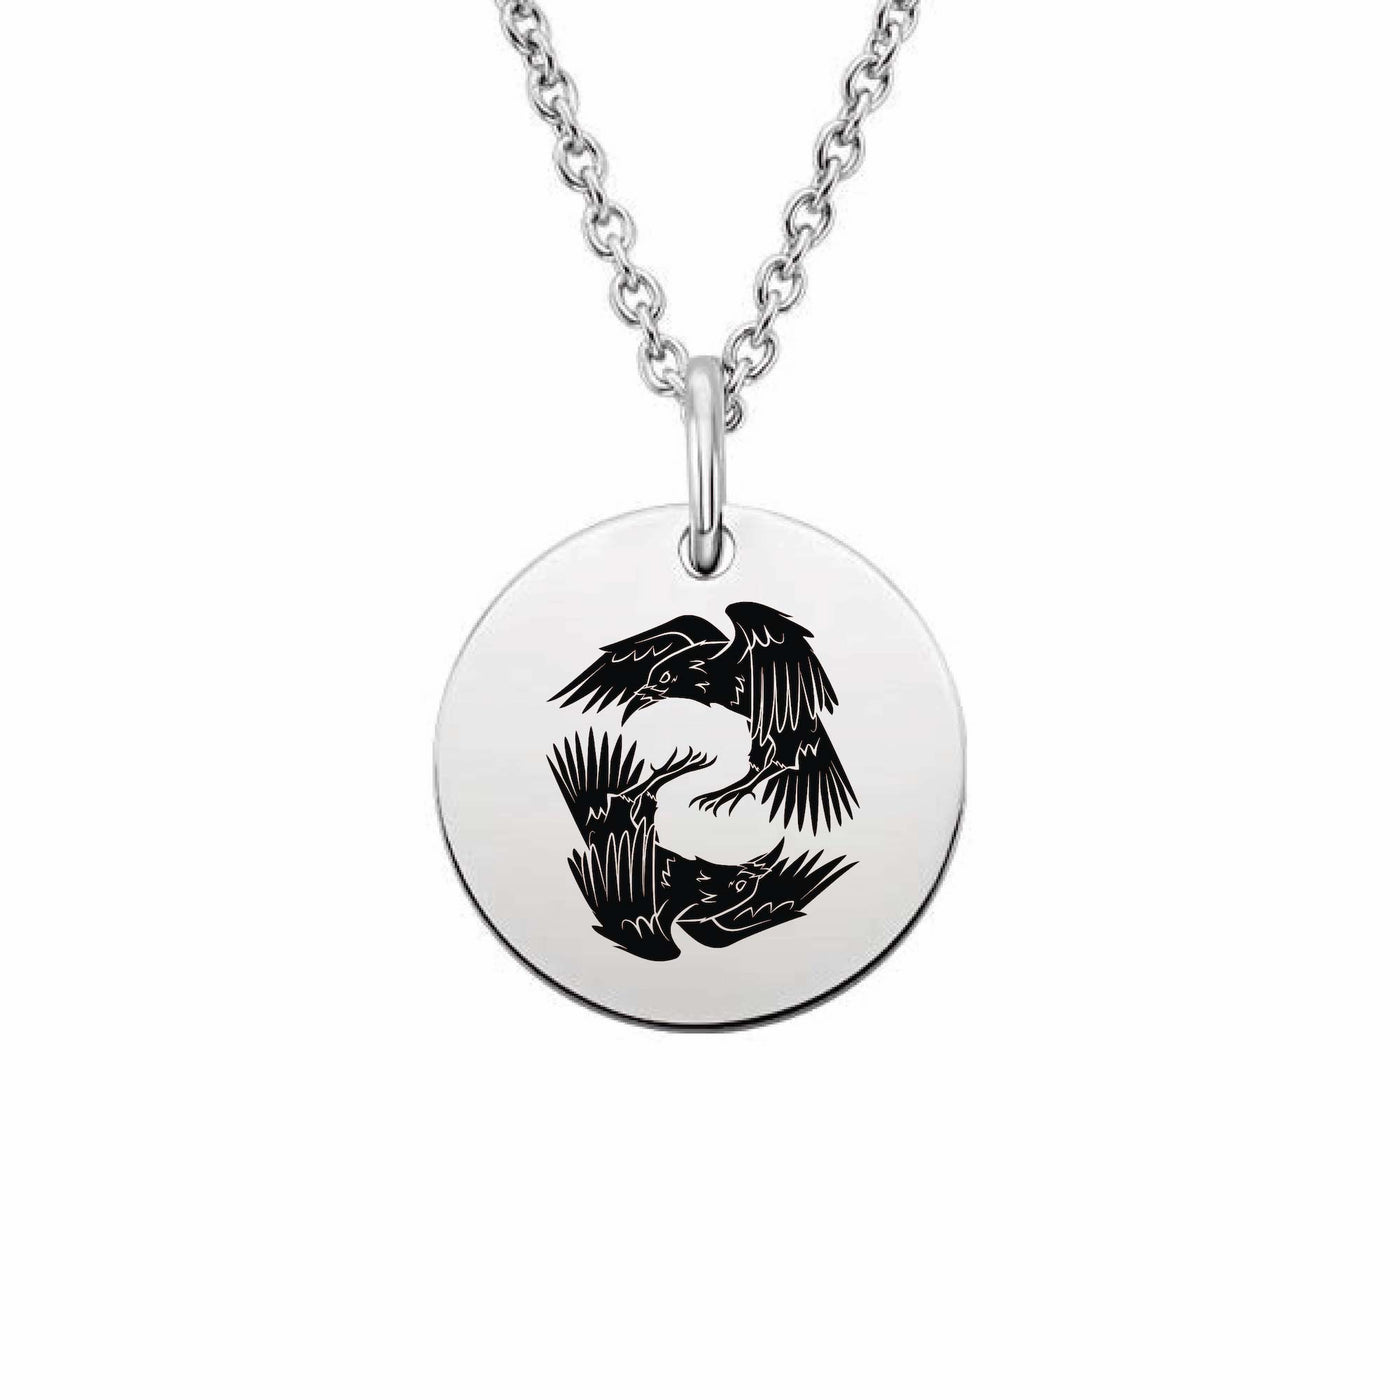 Odin's Ravens Pendant Necklace Scandinavian Design Studio